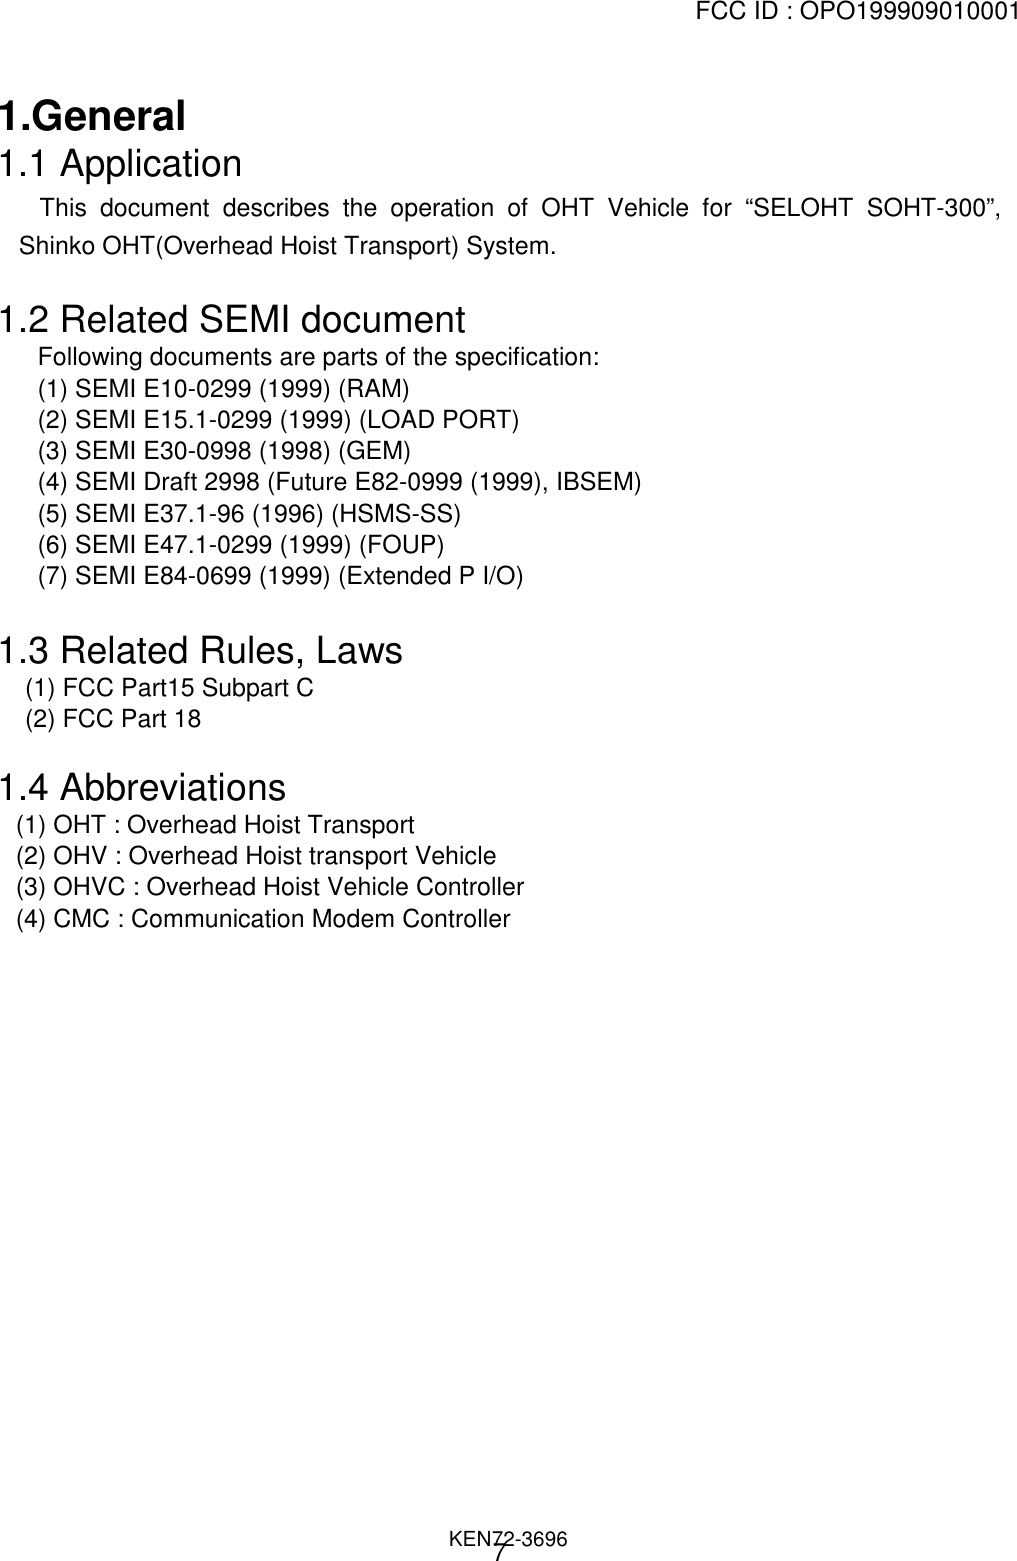 FCC ID : OPO199909010001                                                                              KEN72-369671.General1.1 Application   This document describes the operation of OHT Vehicle for “SELOHT SOHT-300”,Shinko OHT(Overhead Hoist Transport) System.1.2 Related SEMI documentFollowing documents are parts of the specification:(1) SEMI E10-0299 (1999) (RAM)(2) SEMI E15.1-0299 (1999) (LOAD PORT)(3) SEMI E30-0998 (1998) (GEM)(4) SEMI Draft 2998 (Future E82-0999 (1999), IBSEM)(5) SEMI E37.1-96 (1996) (HSMS-SS)(6) SEMI E47.1-0299 (1999) (FOUP)(7) SEMI E84-0699 (1999) (Extended P I/O)1.3 Related Rules, Laws    (1) FCC Part15 Subpart C    (2) FCC Part 181.4 Abbreviations(1) OHT : Overhead Hoist Transport(2) OHV : Overhead Hoist transport Vehicle(3) OHVC : Overhead Hoist Vehicle Controller(4) CMC : Communication Modem Controller